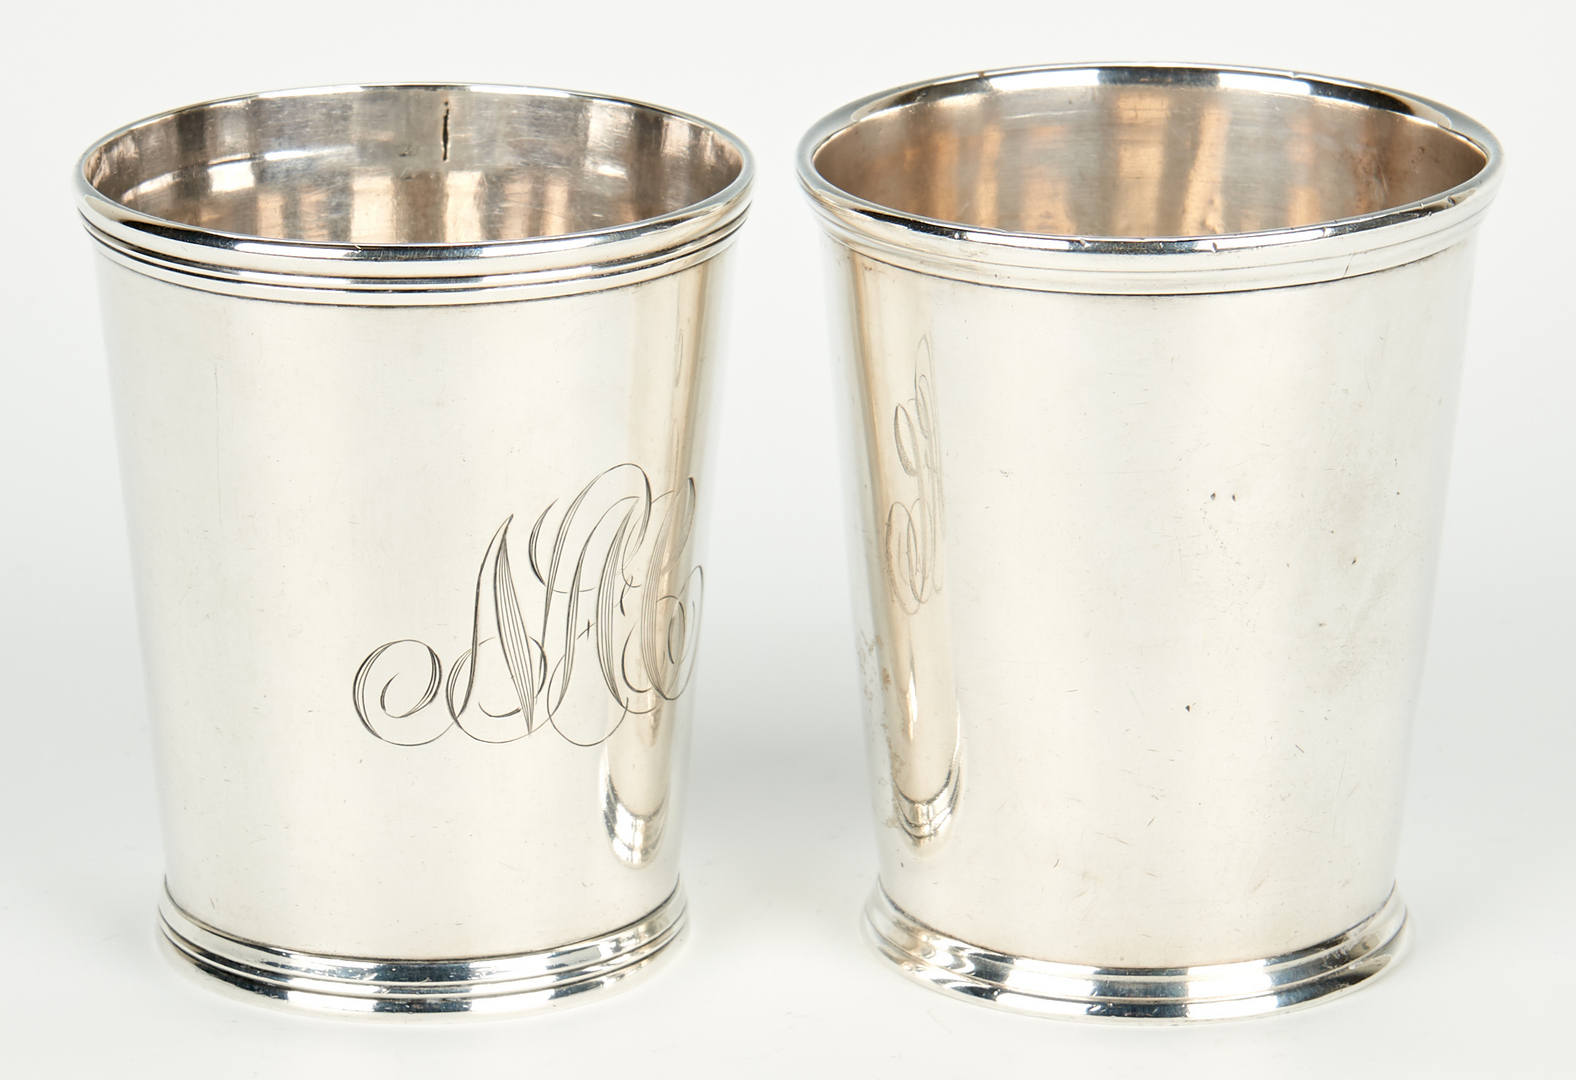 Lot 59: 4 Kentucky Akin Retailed Coin Silver Julep Cups